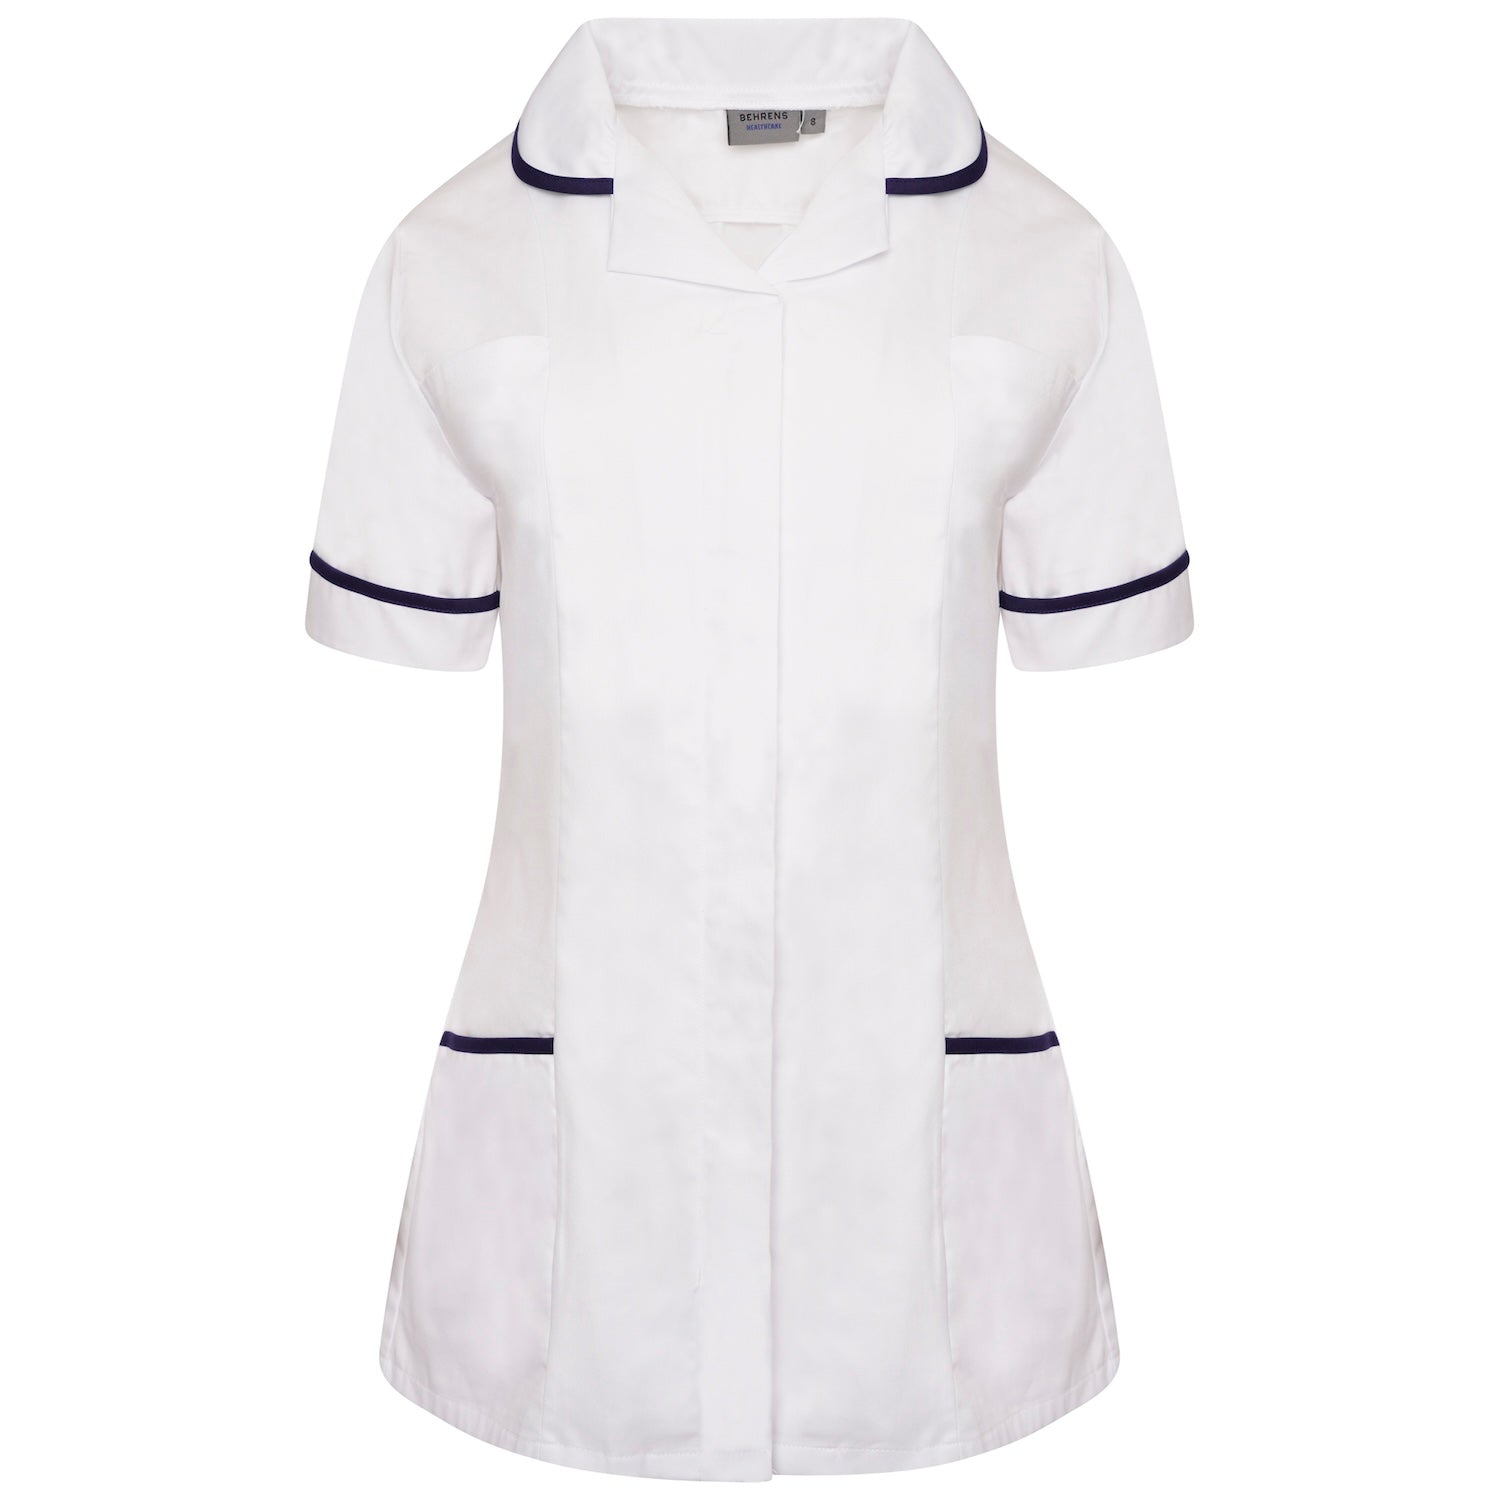 Ladies Healthcare Tunic | Round Collar | White/Navy Trim